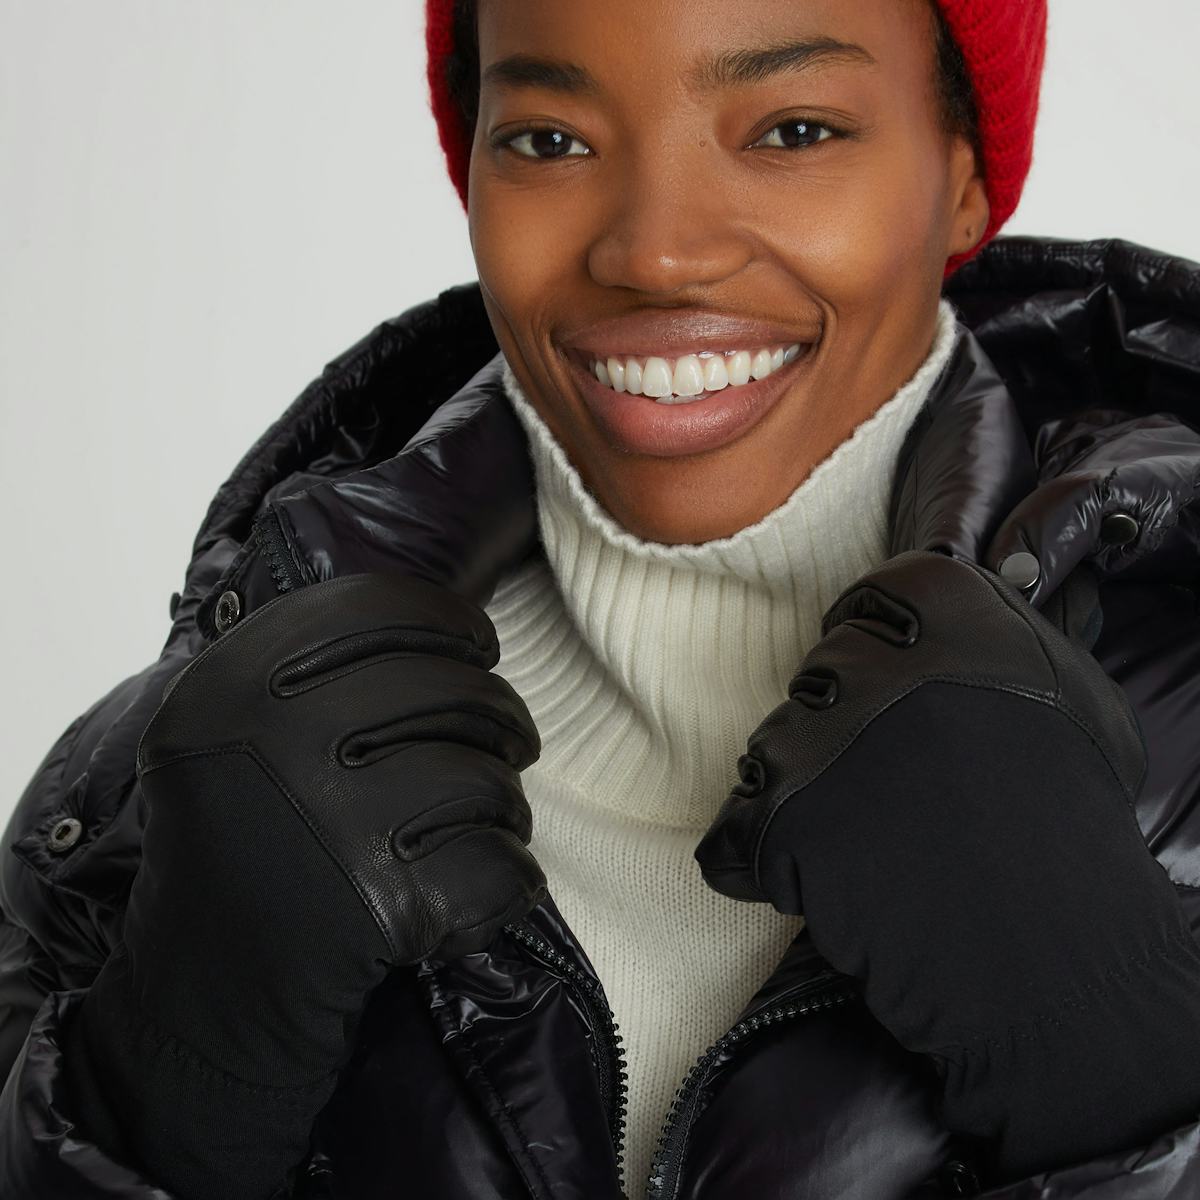 Women's Ski Gloves